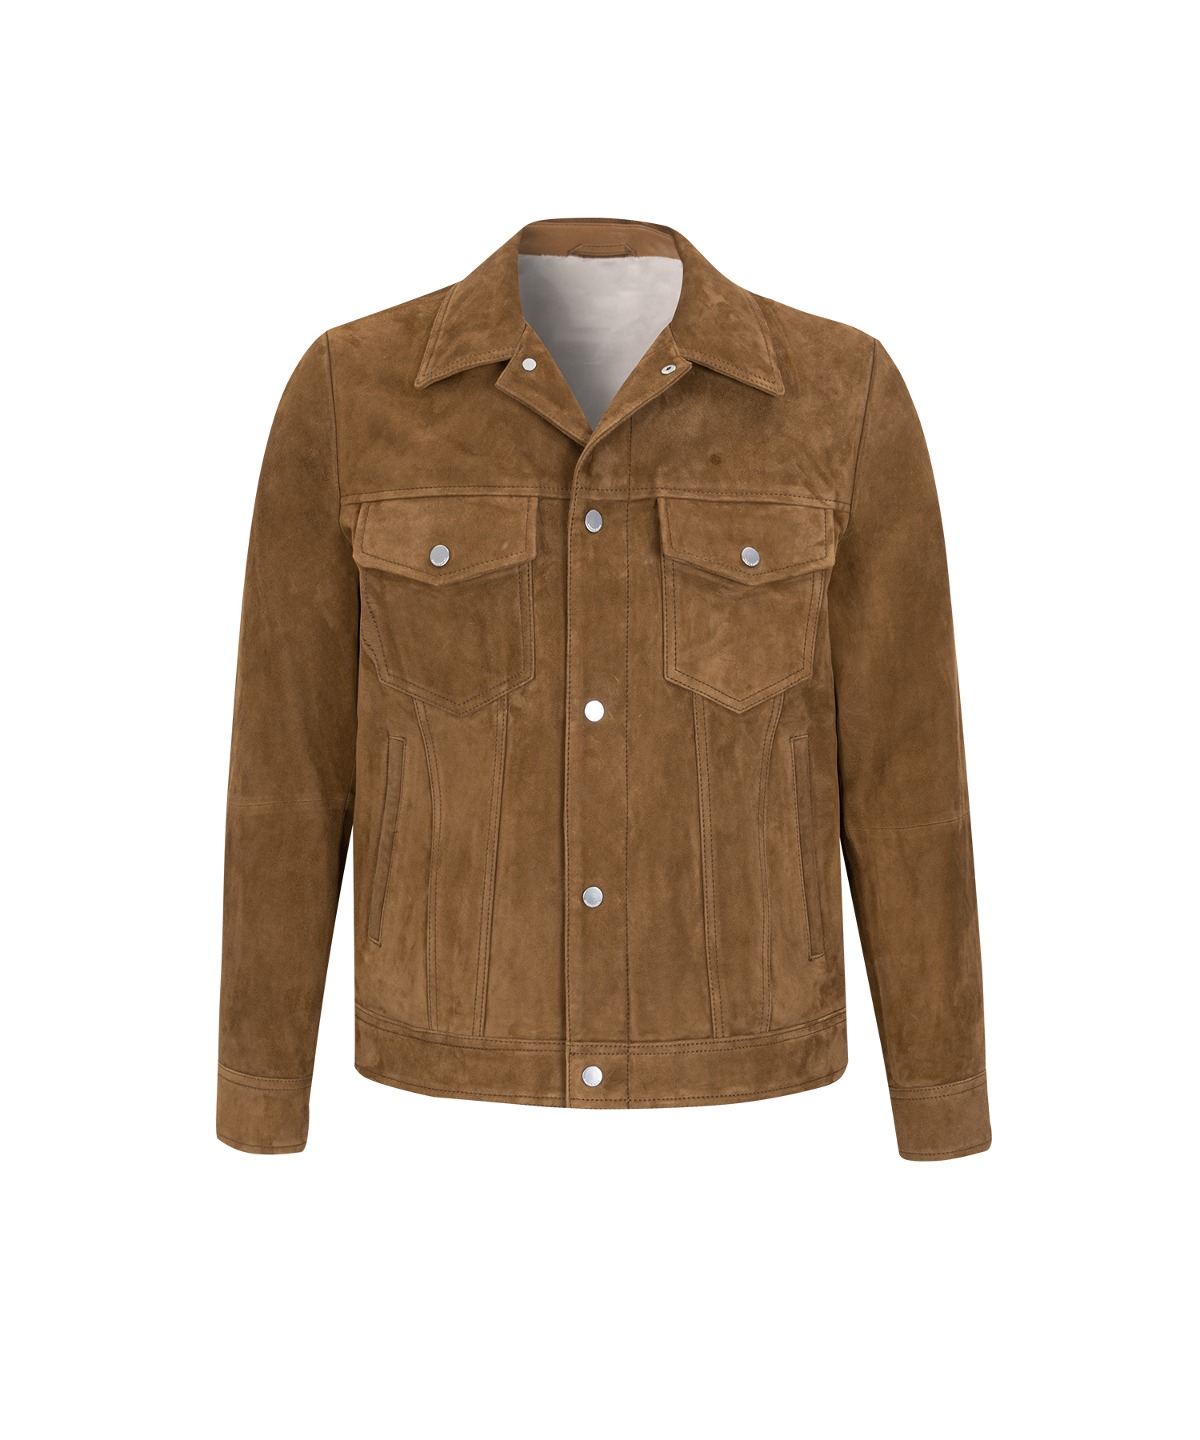 Western suede trucker jacket / Goat skin (Cognac)